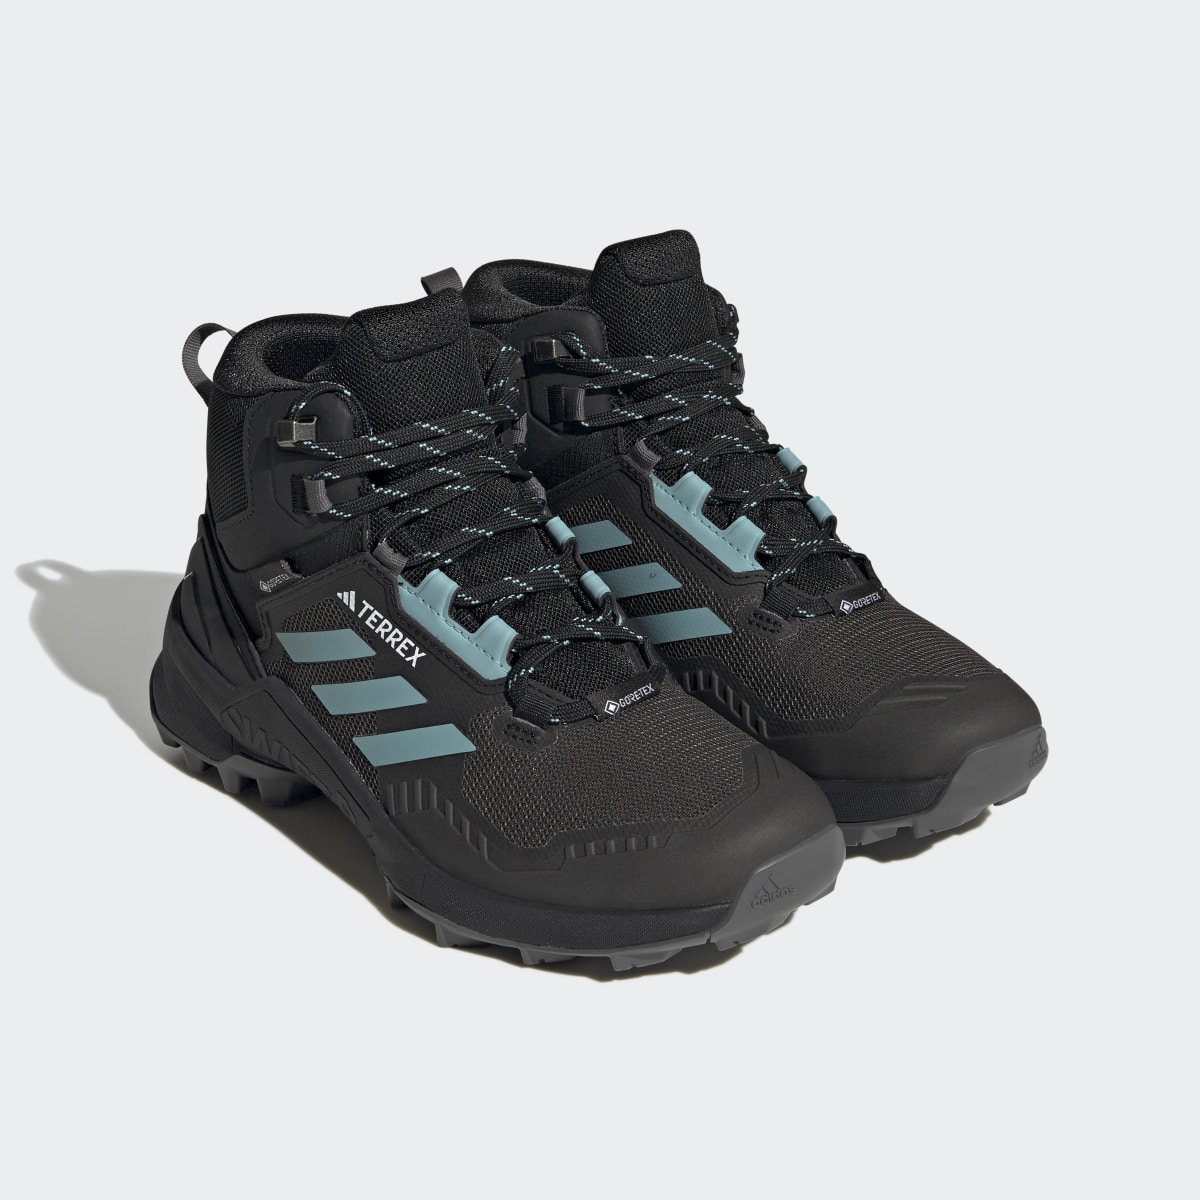 Adidas Terrex Swift R3 Mid GORE-TEX Hiking Shoes. 5